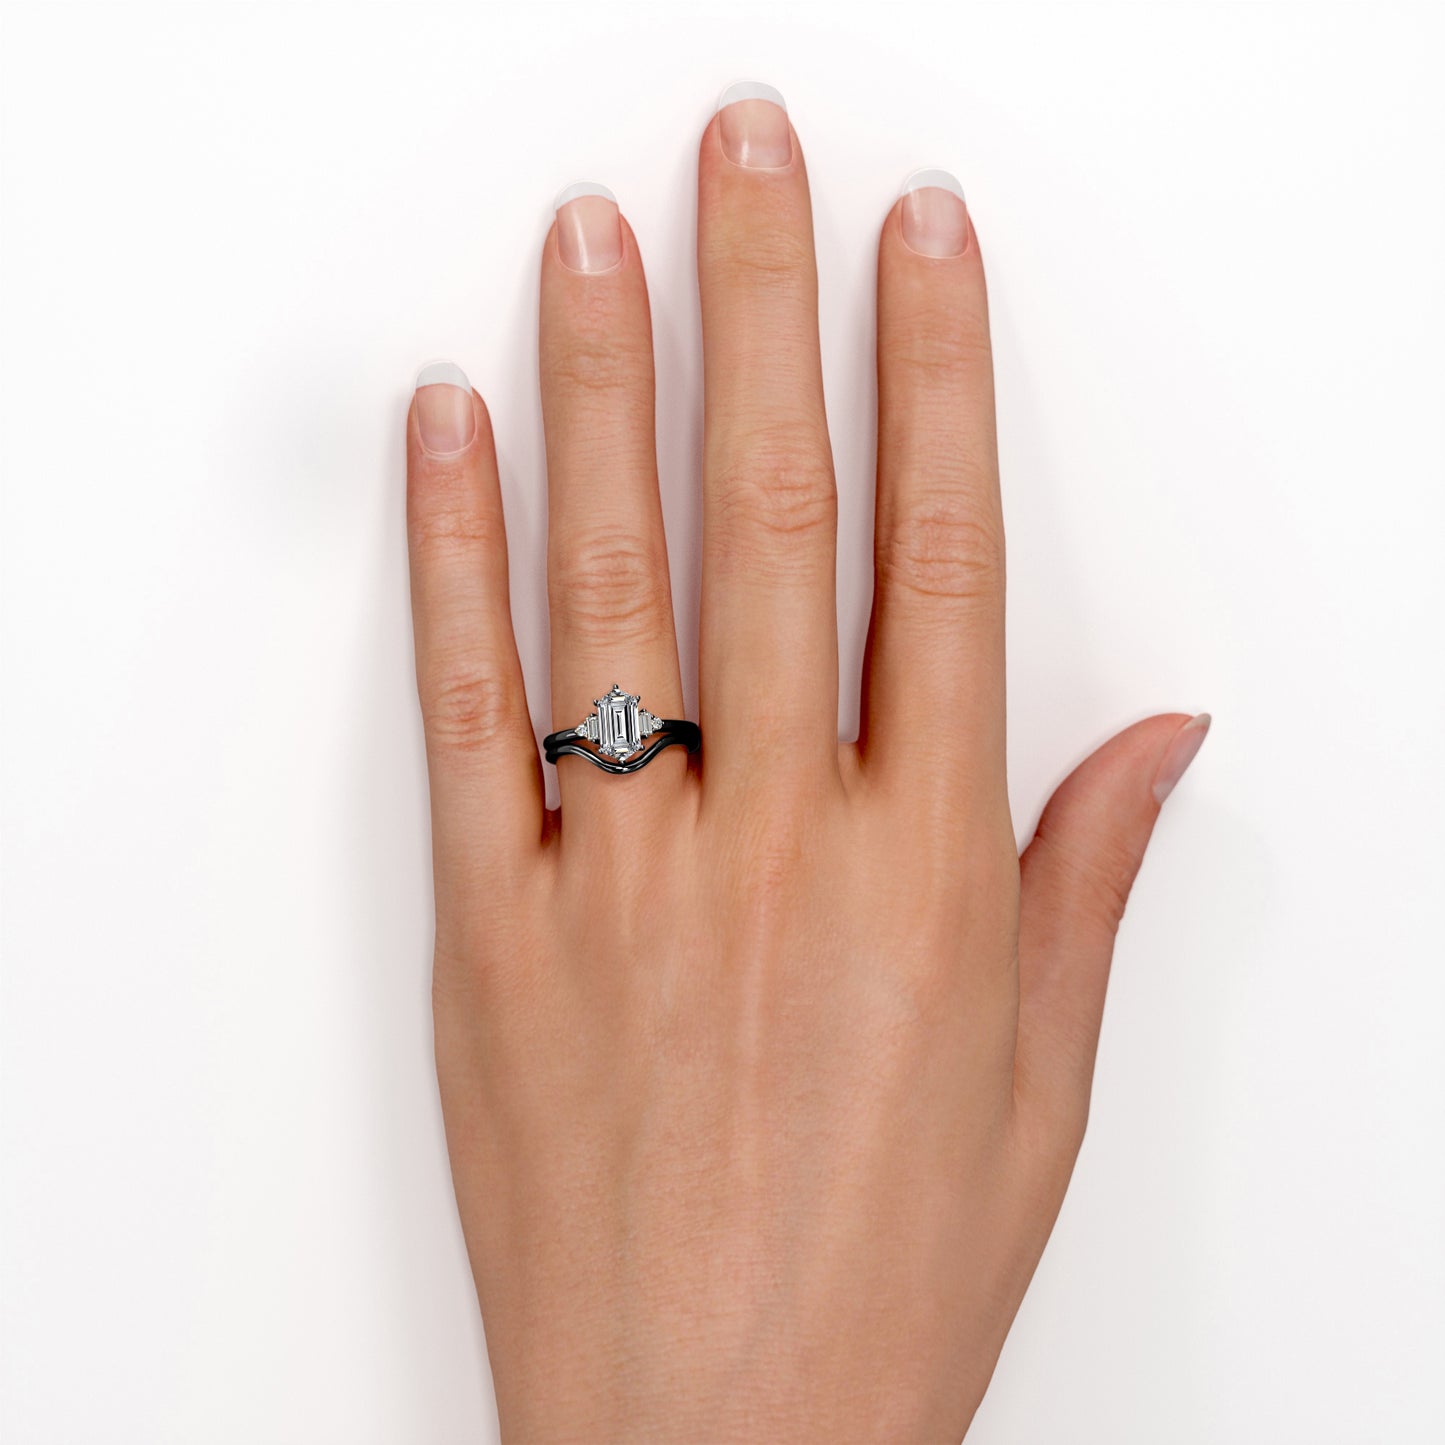 Geometric 1.1 carat Hexagon shaped Moissanite and diamond 6 prong wedding ring set in White gold